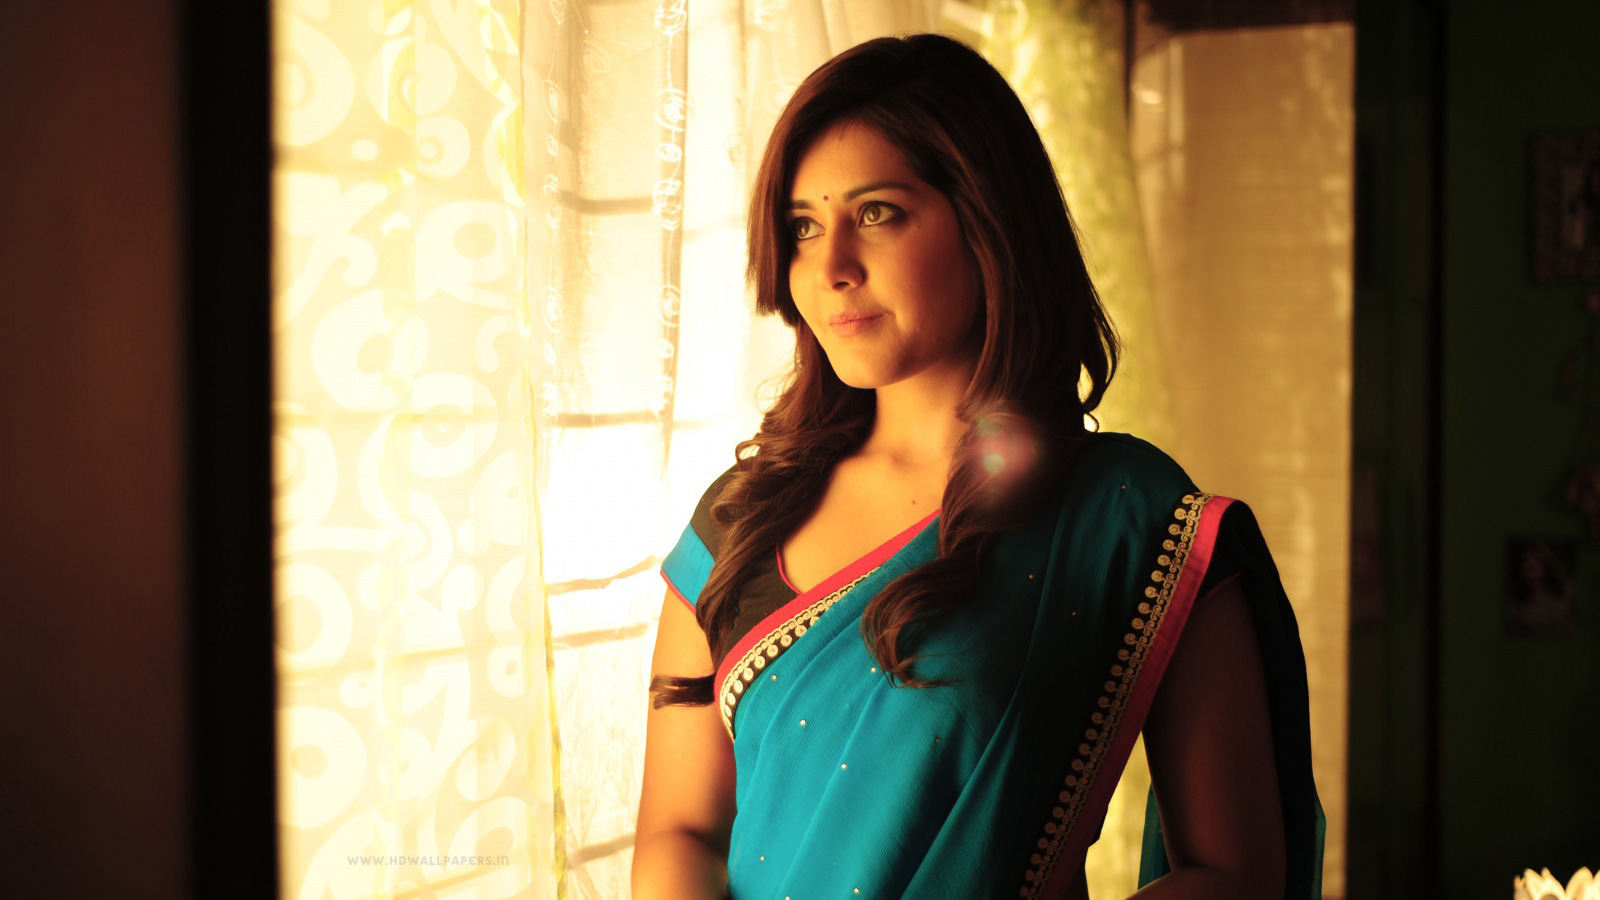 Download Tamil actress hd wallpapers 1080p – Printable graphics